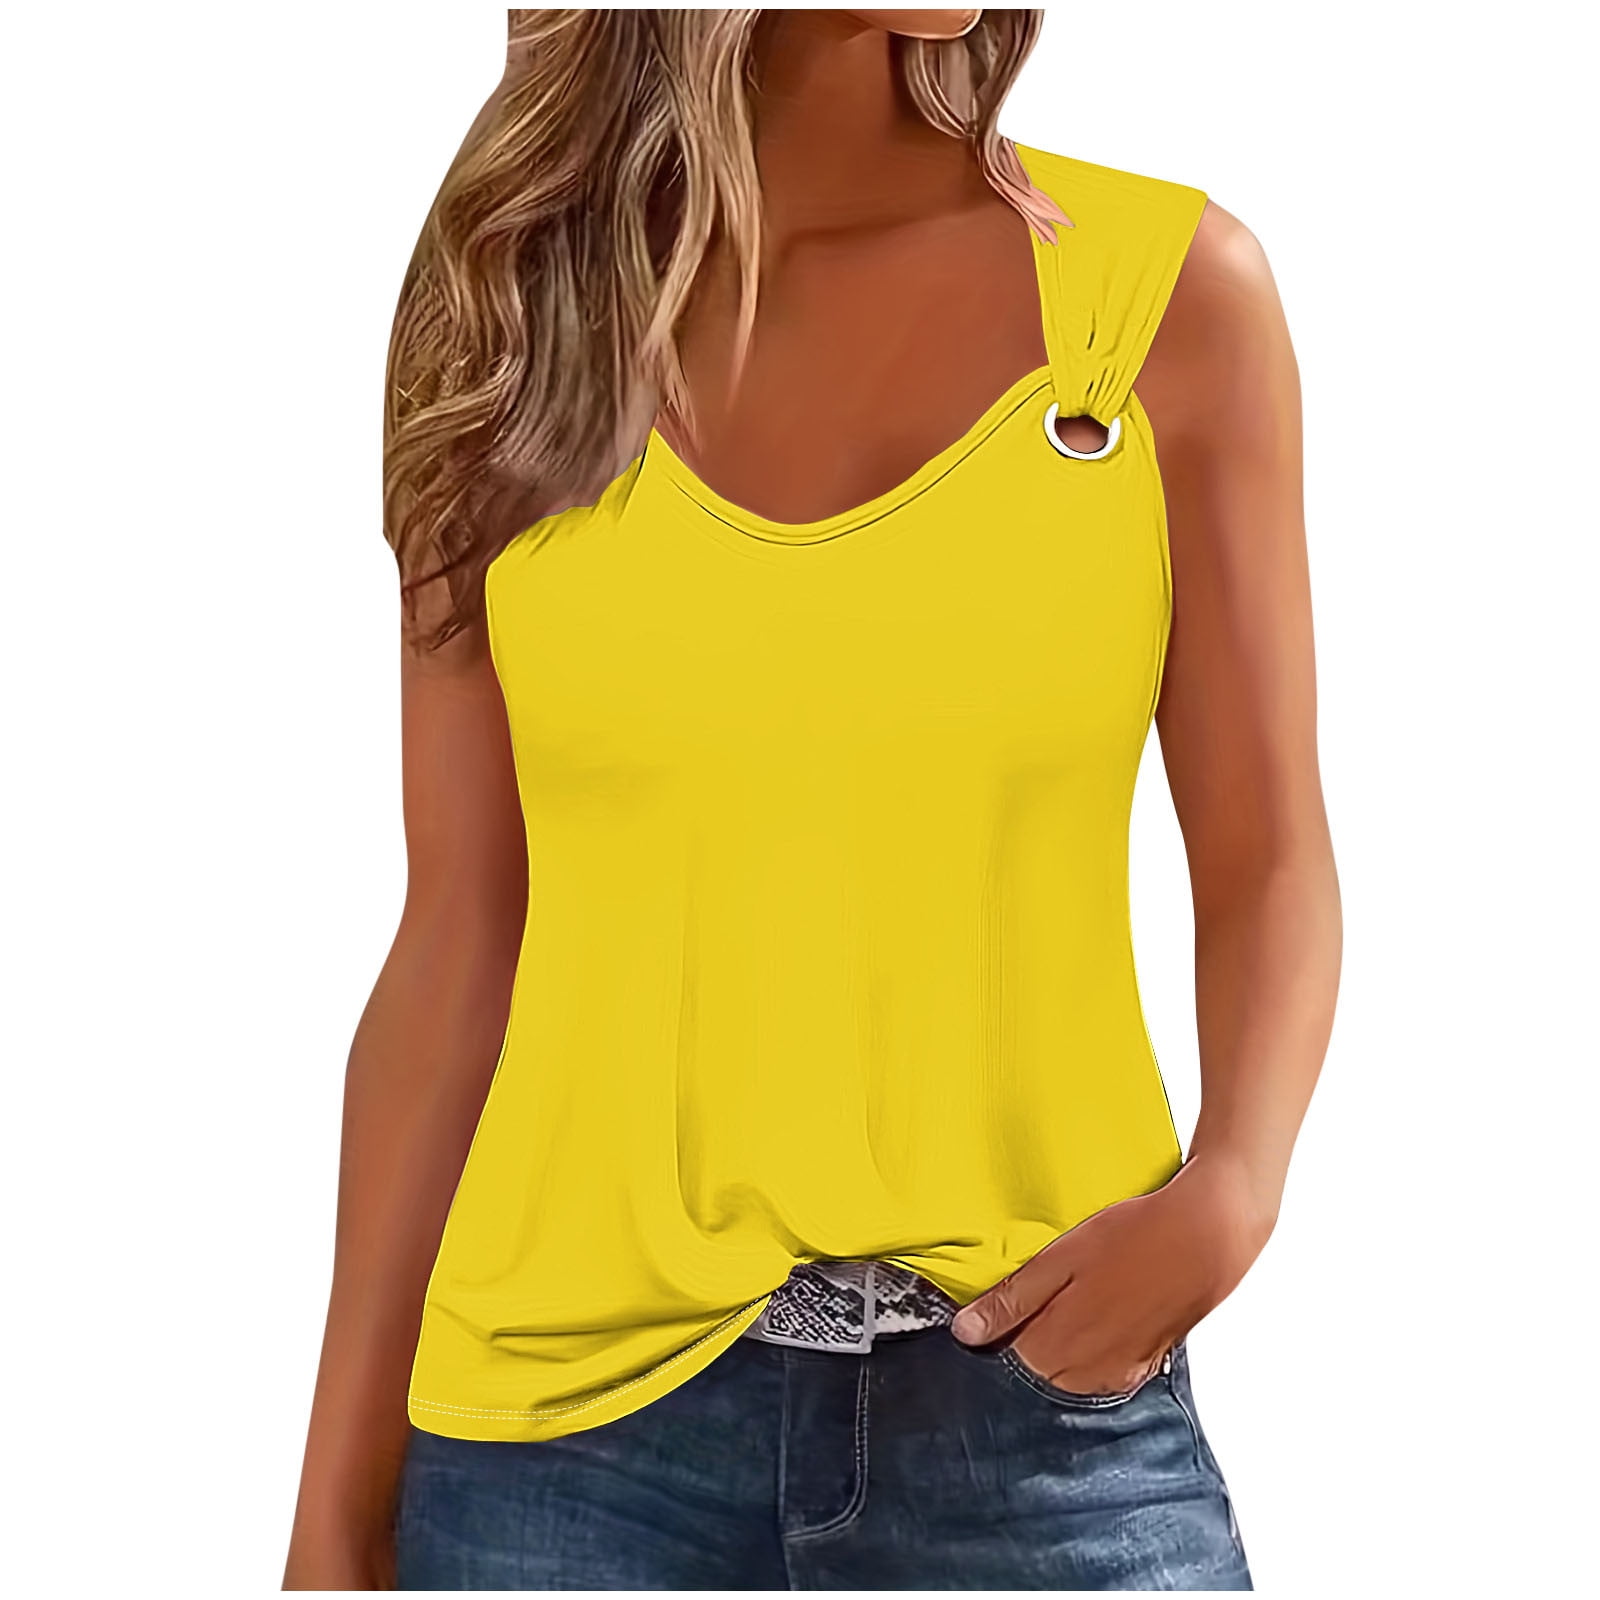 Y-586 Mustard Yellow Sleeveless Spaghetti Strap Tee Shirts for Ladies ...